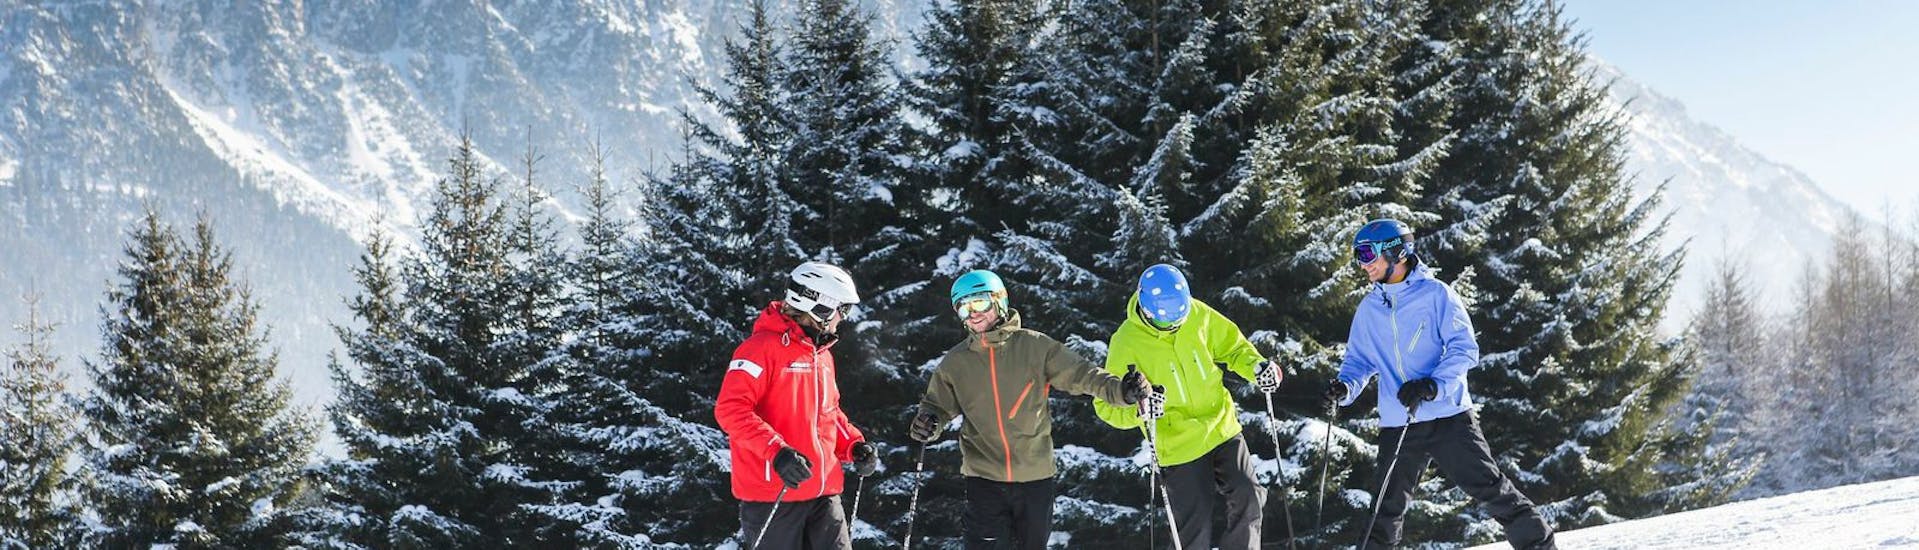 Clases de esquí para adultos a partir de 16 años para debutantes.